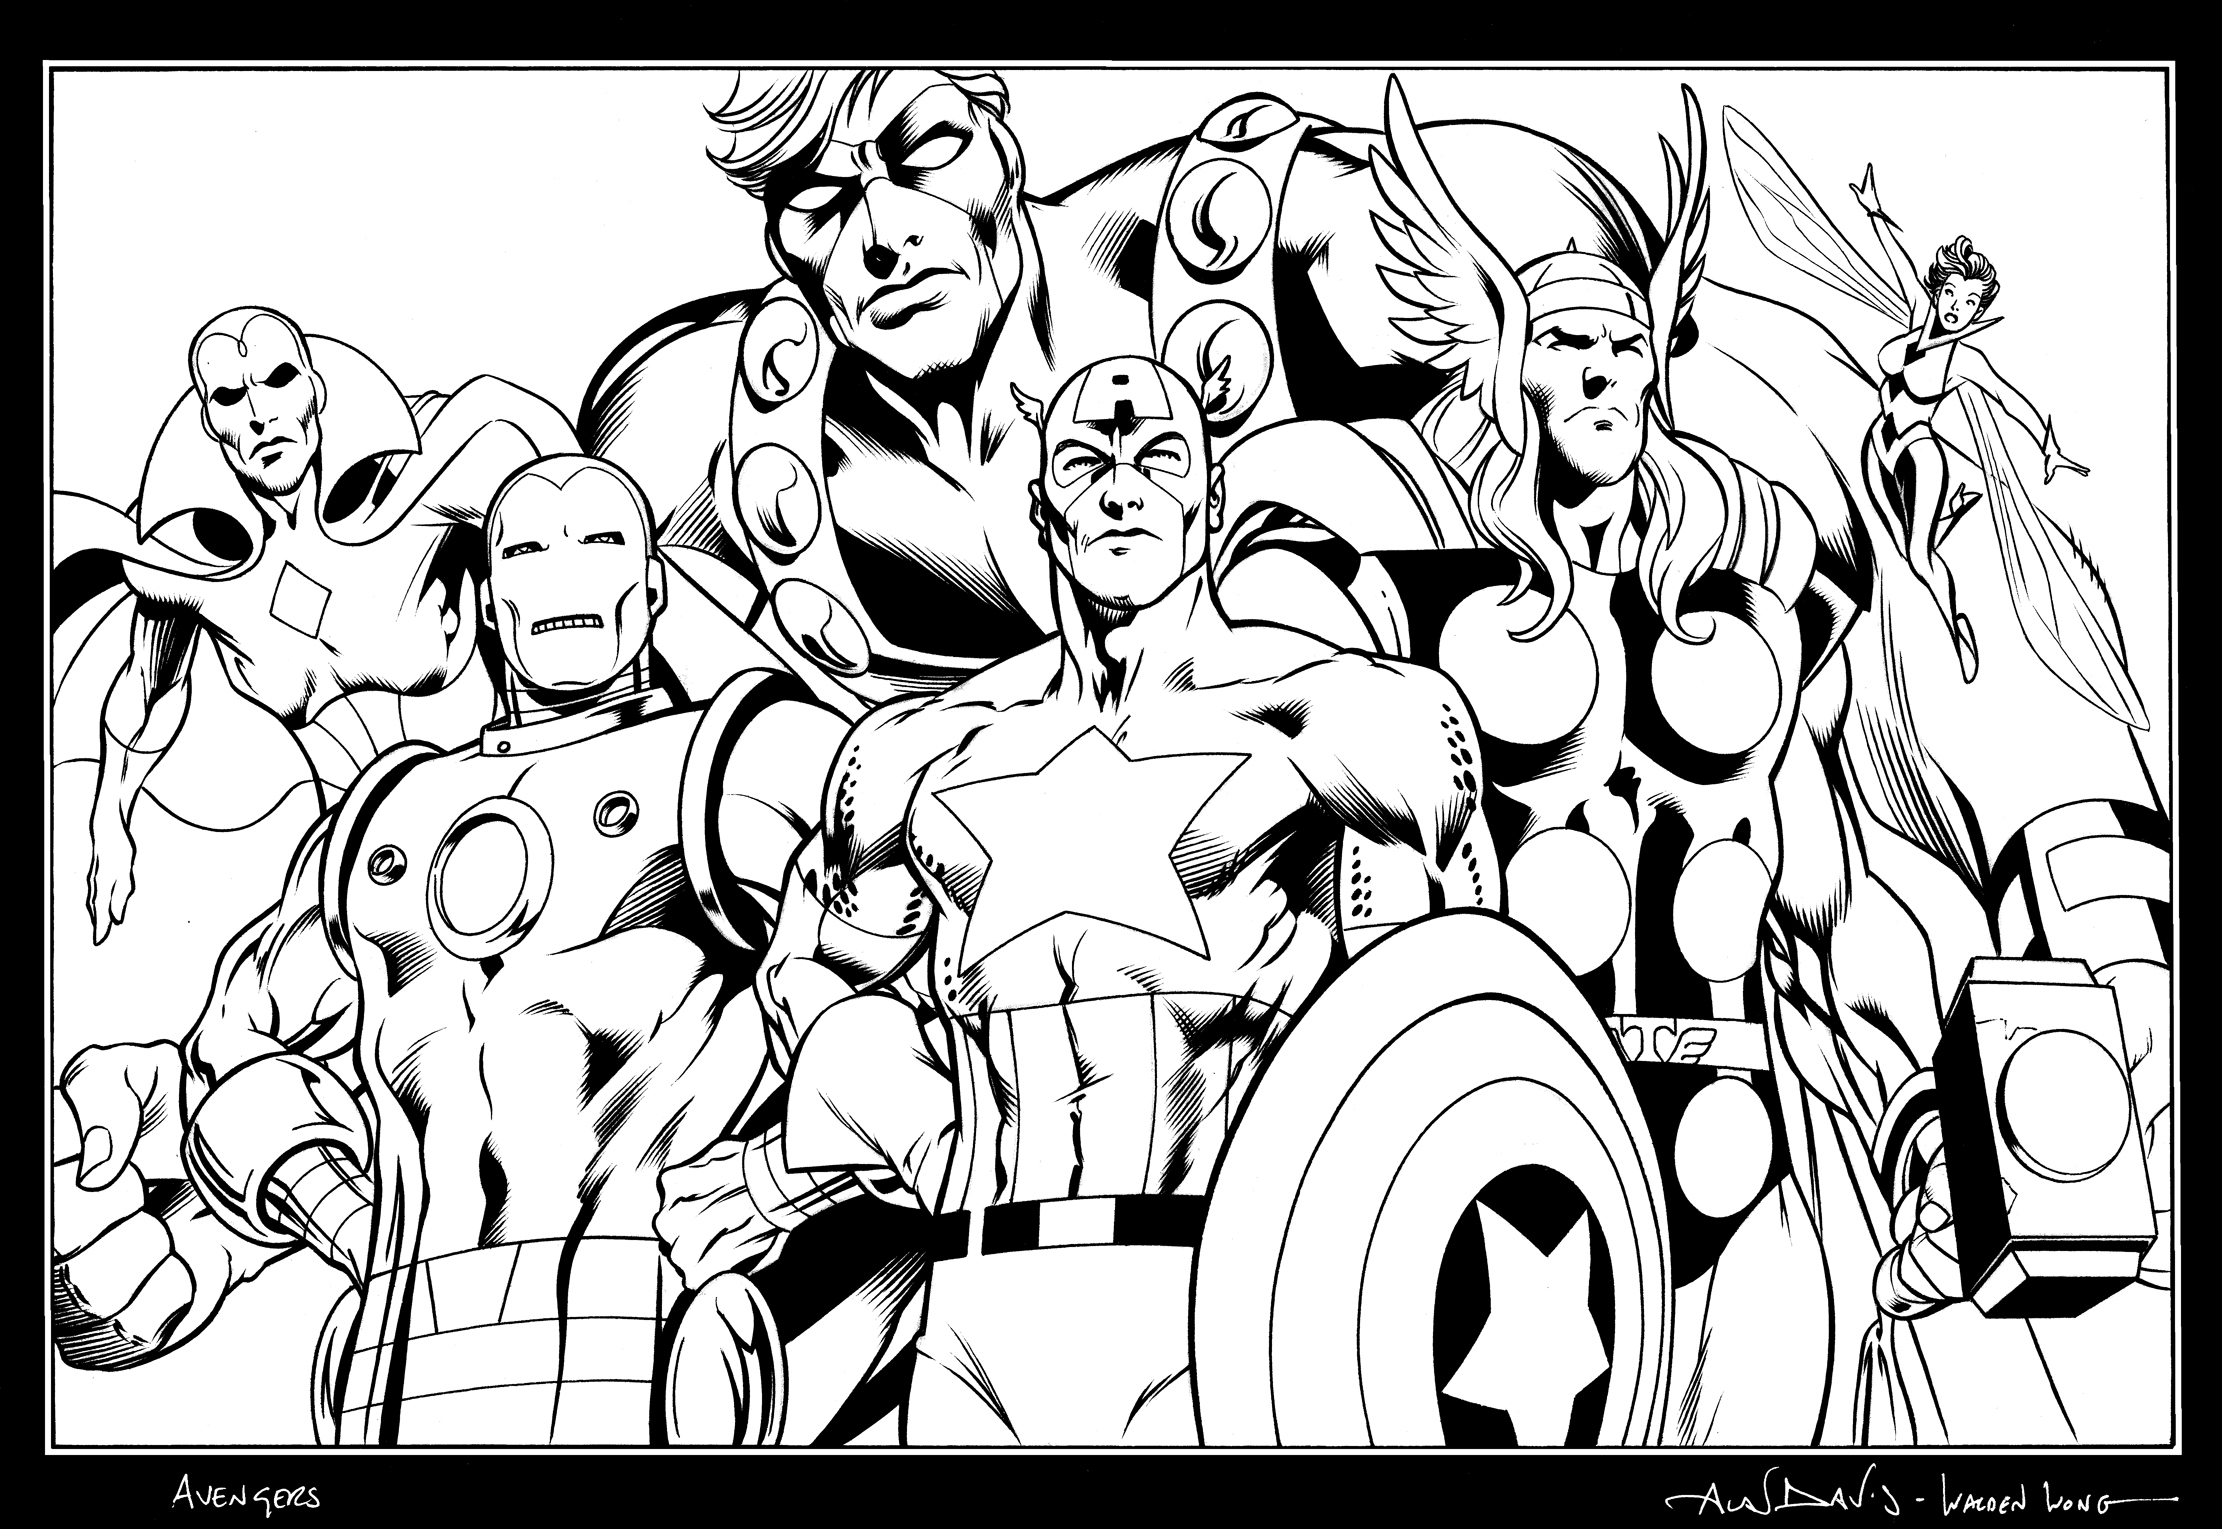 Coloriage Super Heros Avengers A Imprimer 160 dessins de coloriage avengers à imprimer sur LaGuerche.com - Page 3